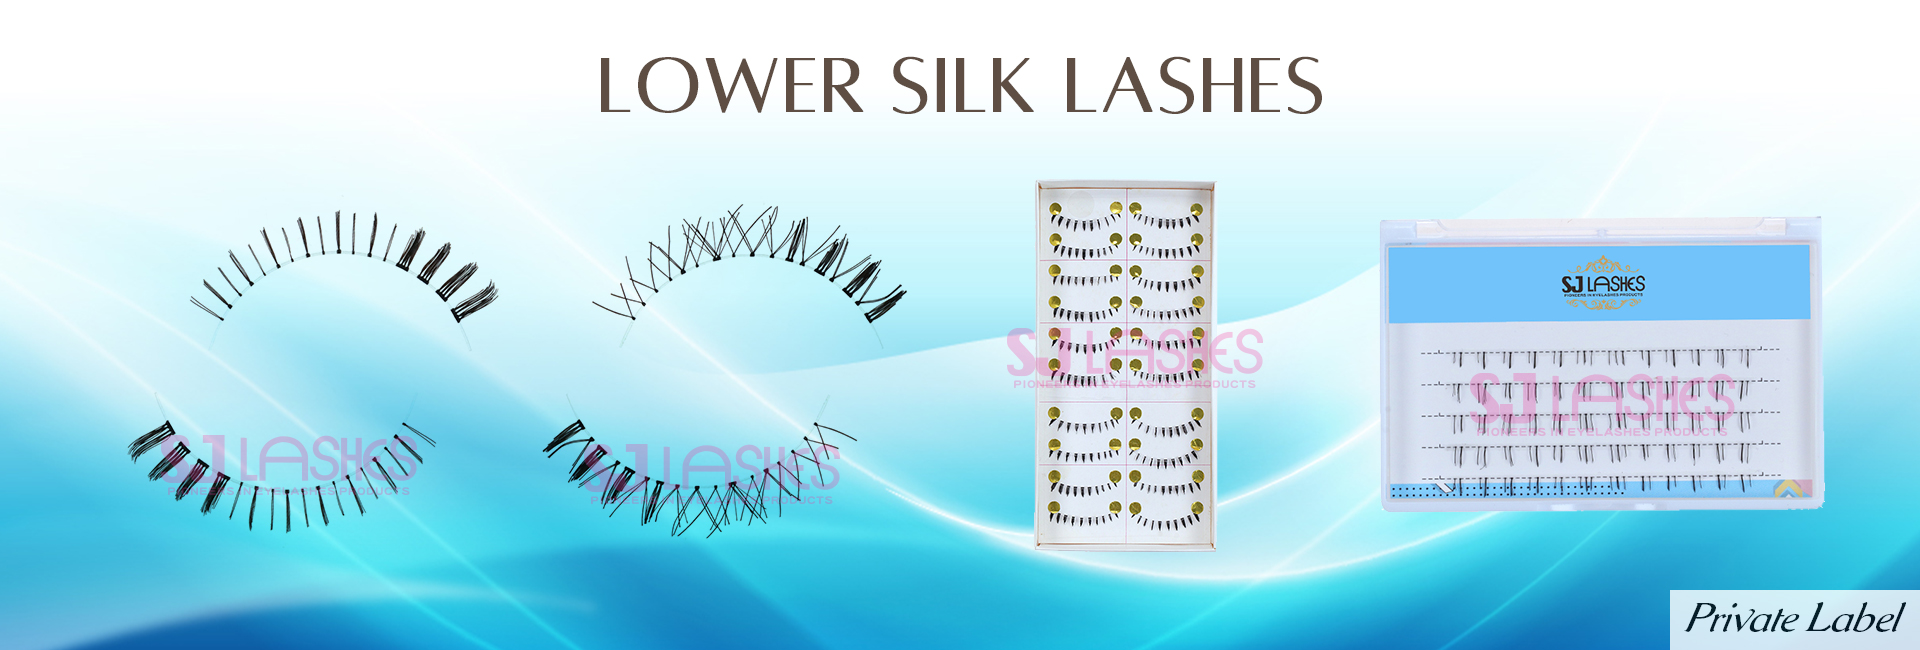 Lower Silk Lashes